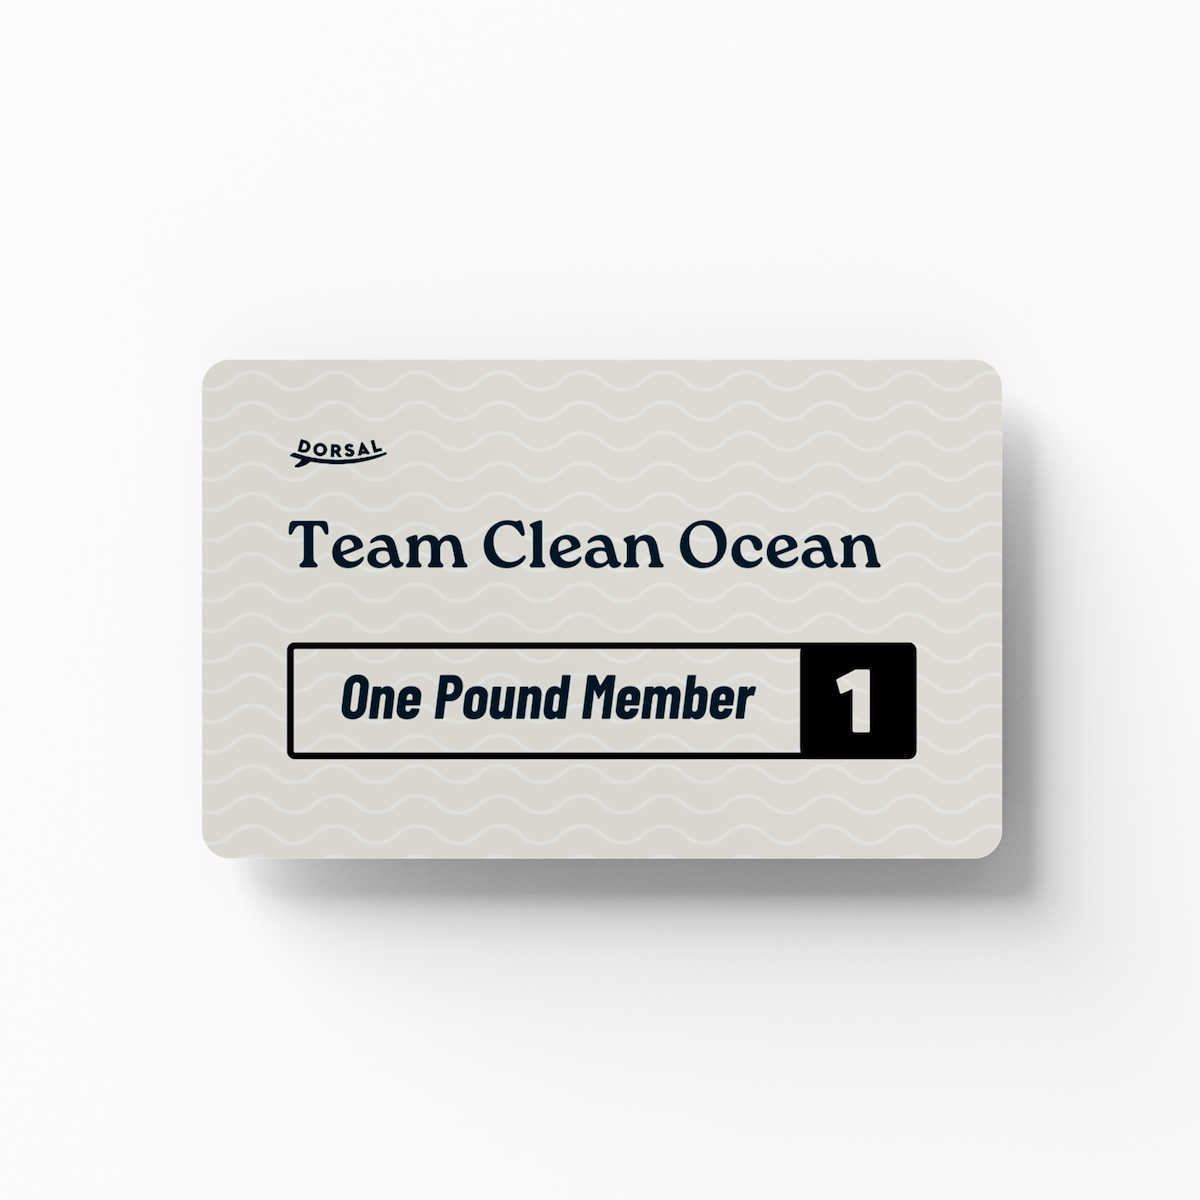 Team Clean Ocean.